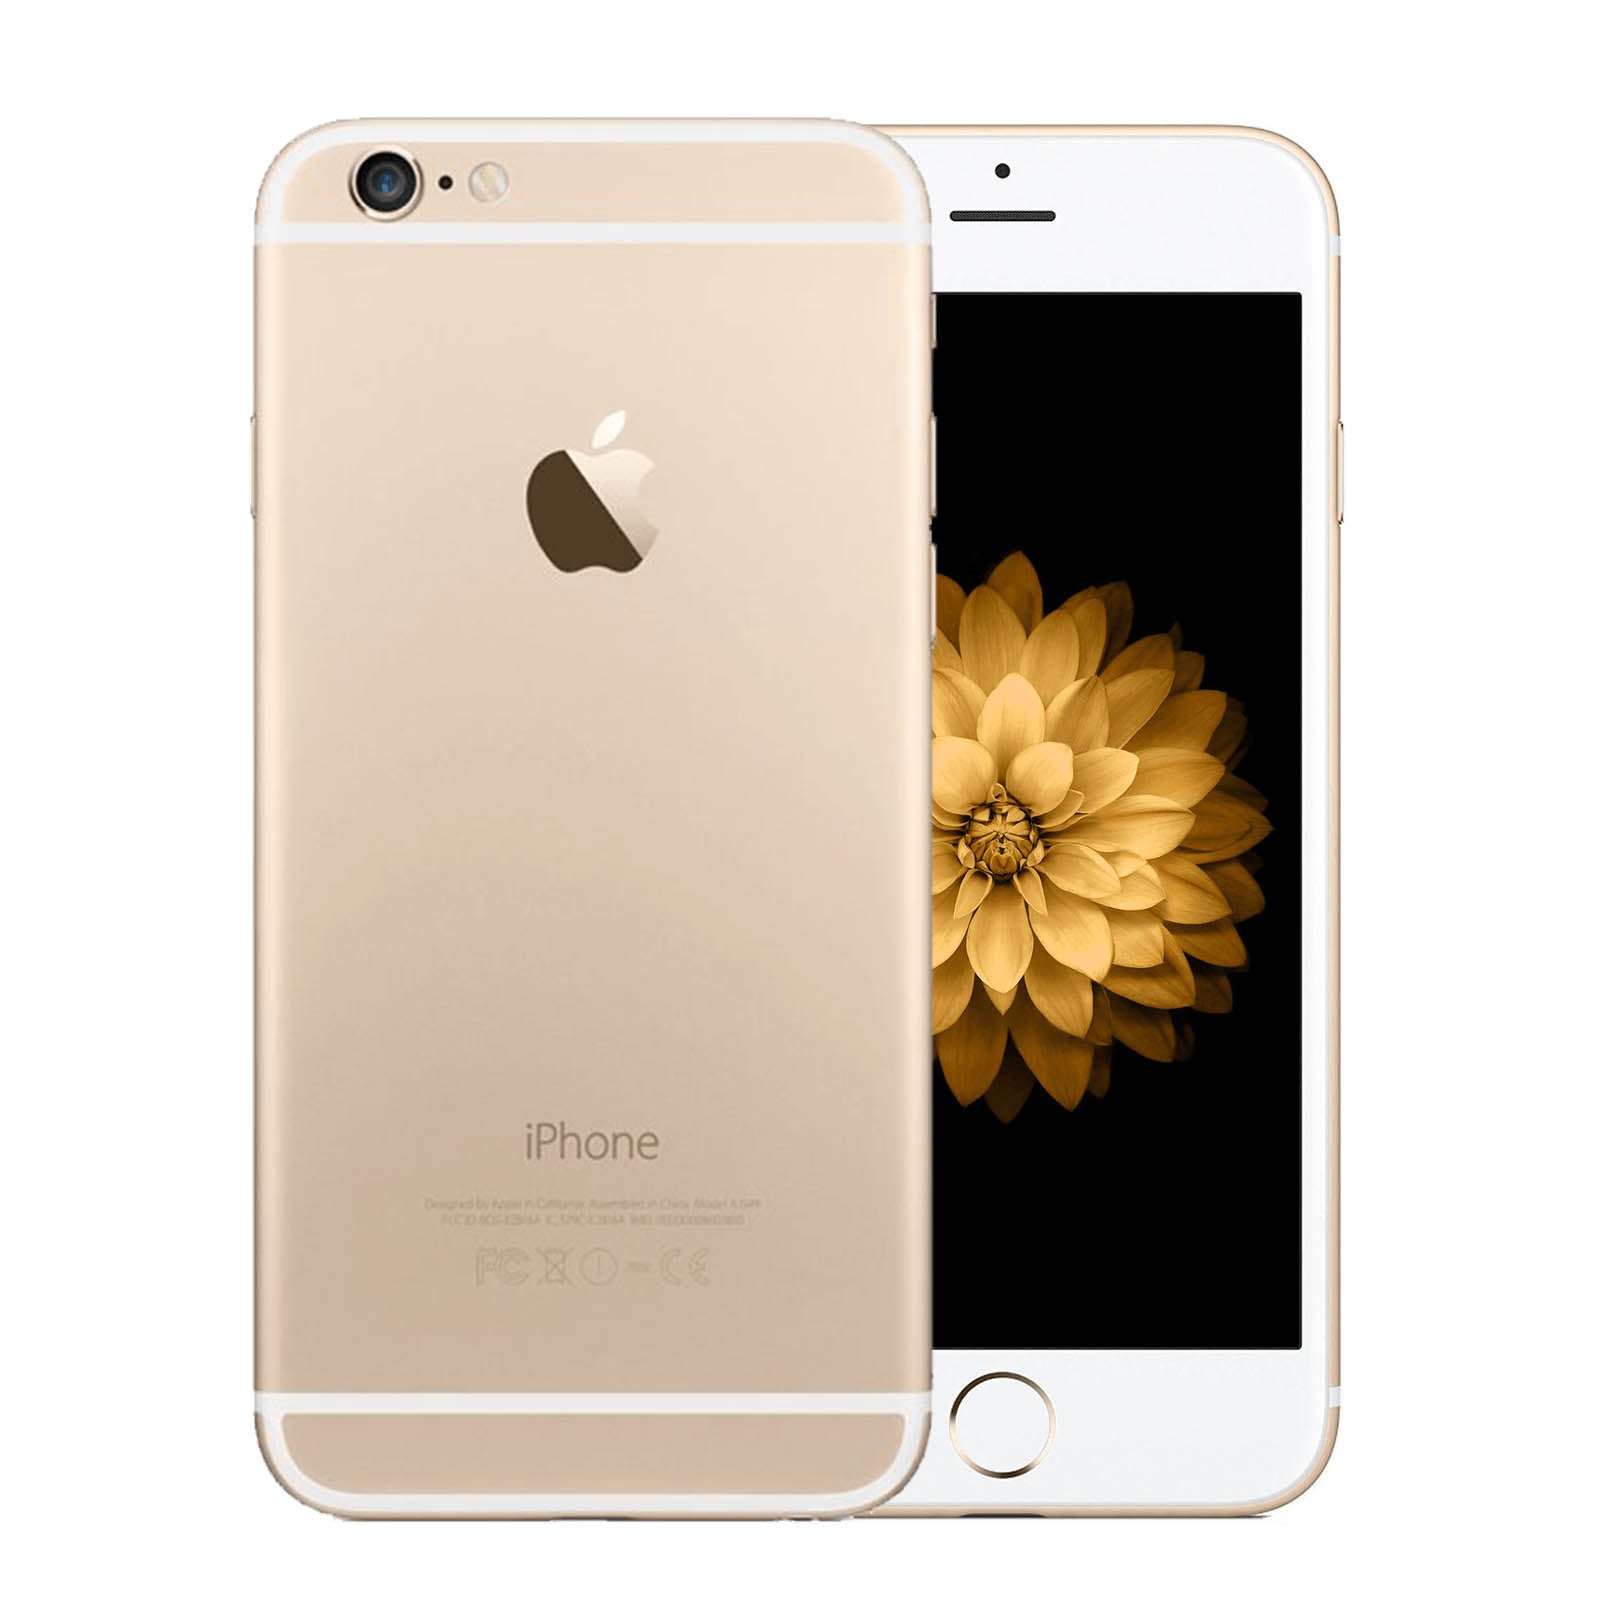 Apple iPhone 6 64GB Gold Fair - Unlocked